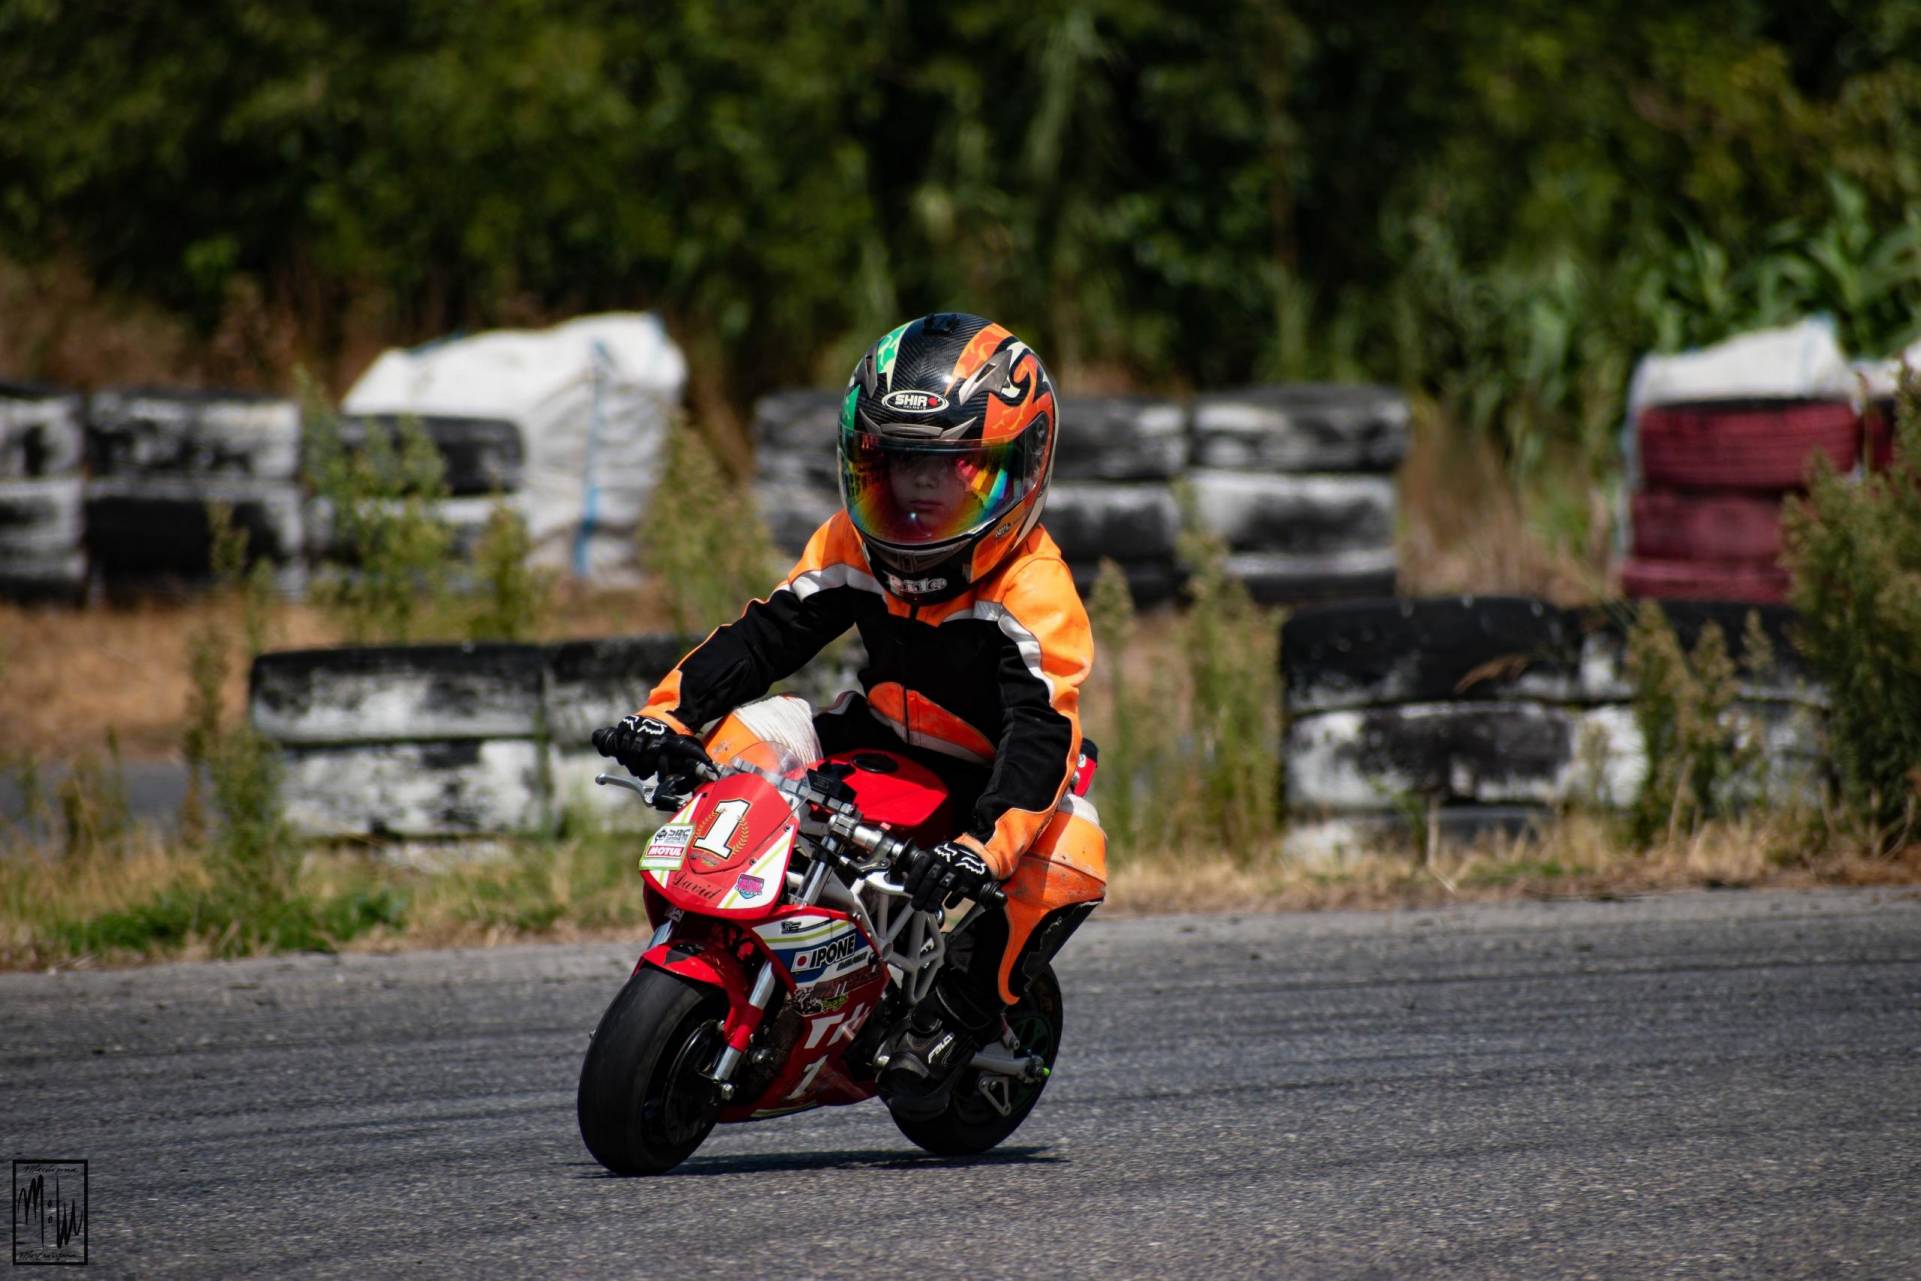 kid biker riding small red sports bike in race track